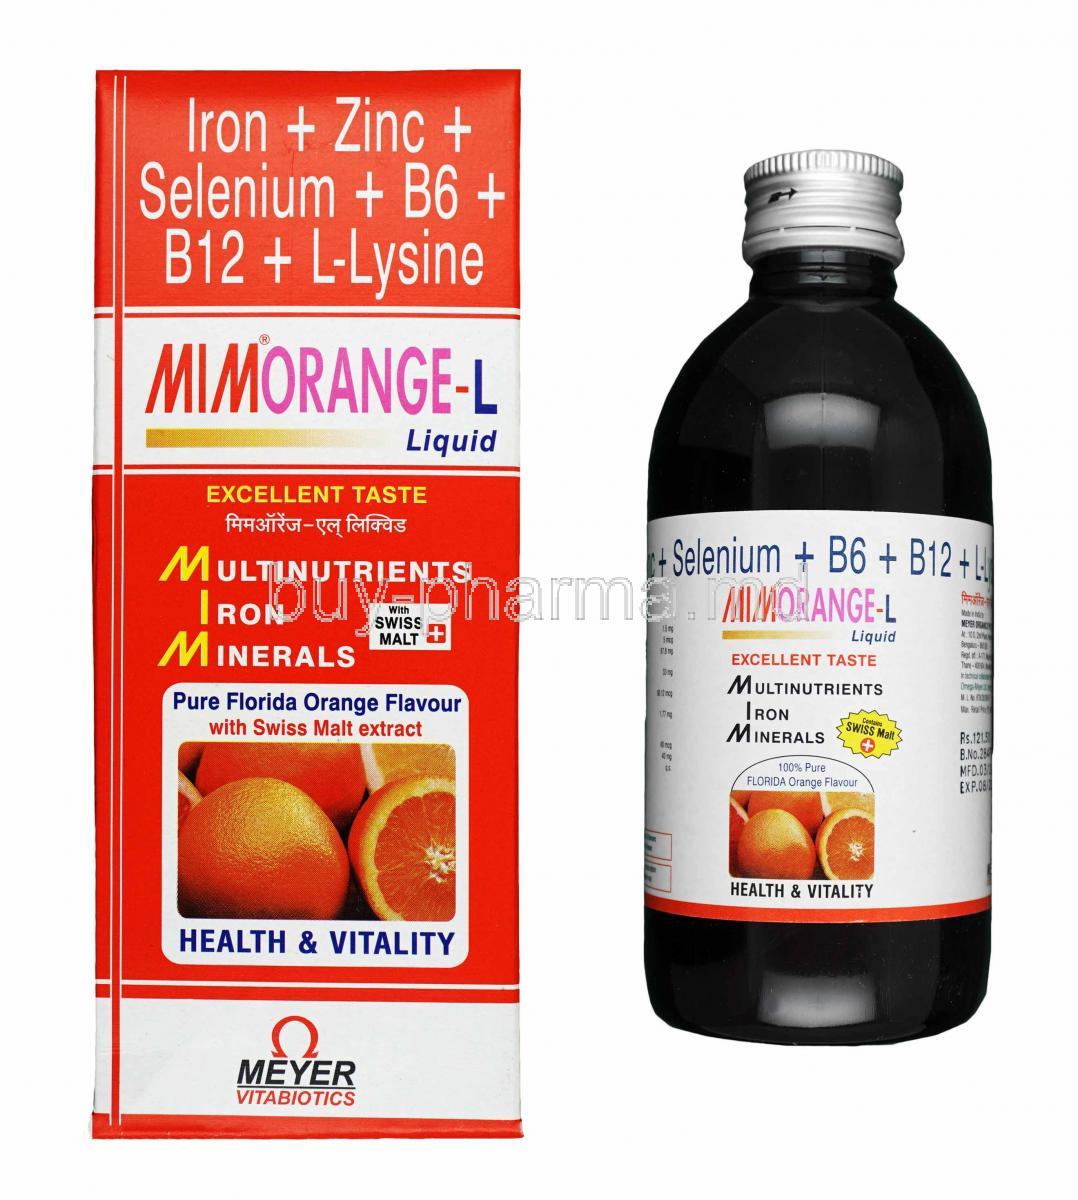 Mimorange-L Liquid box and bottle